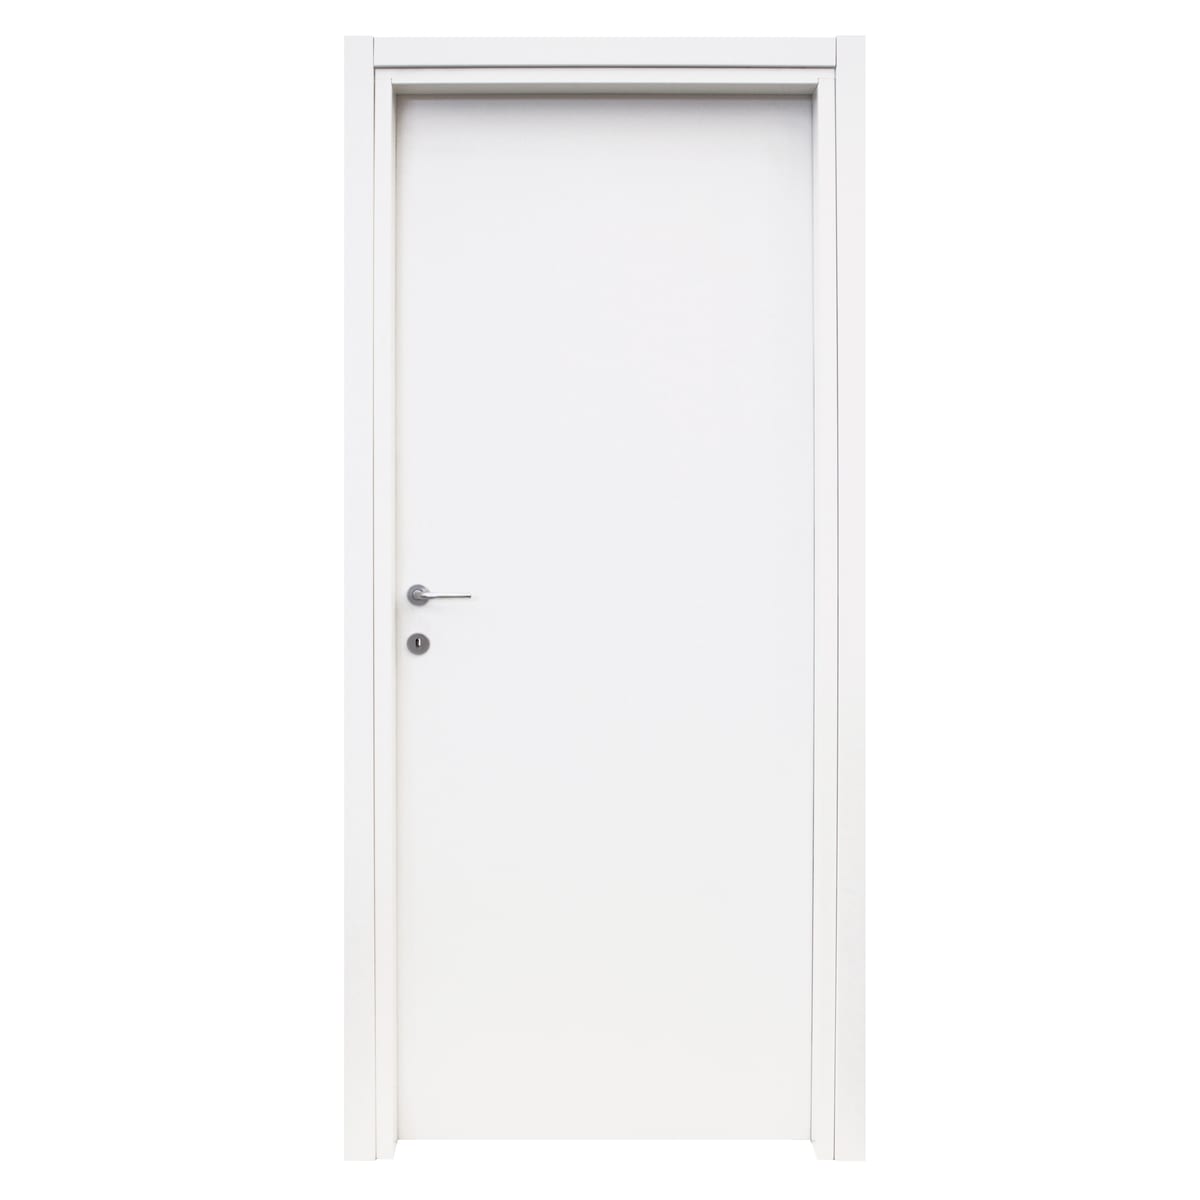 ANNA DOOR WHITE 80X210 CM REVERSIBLE HINGED DOOR CHROME HARDWARE